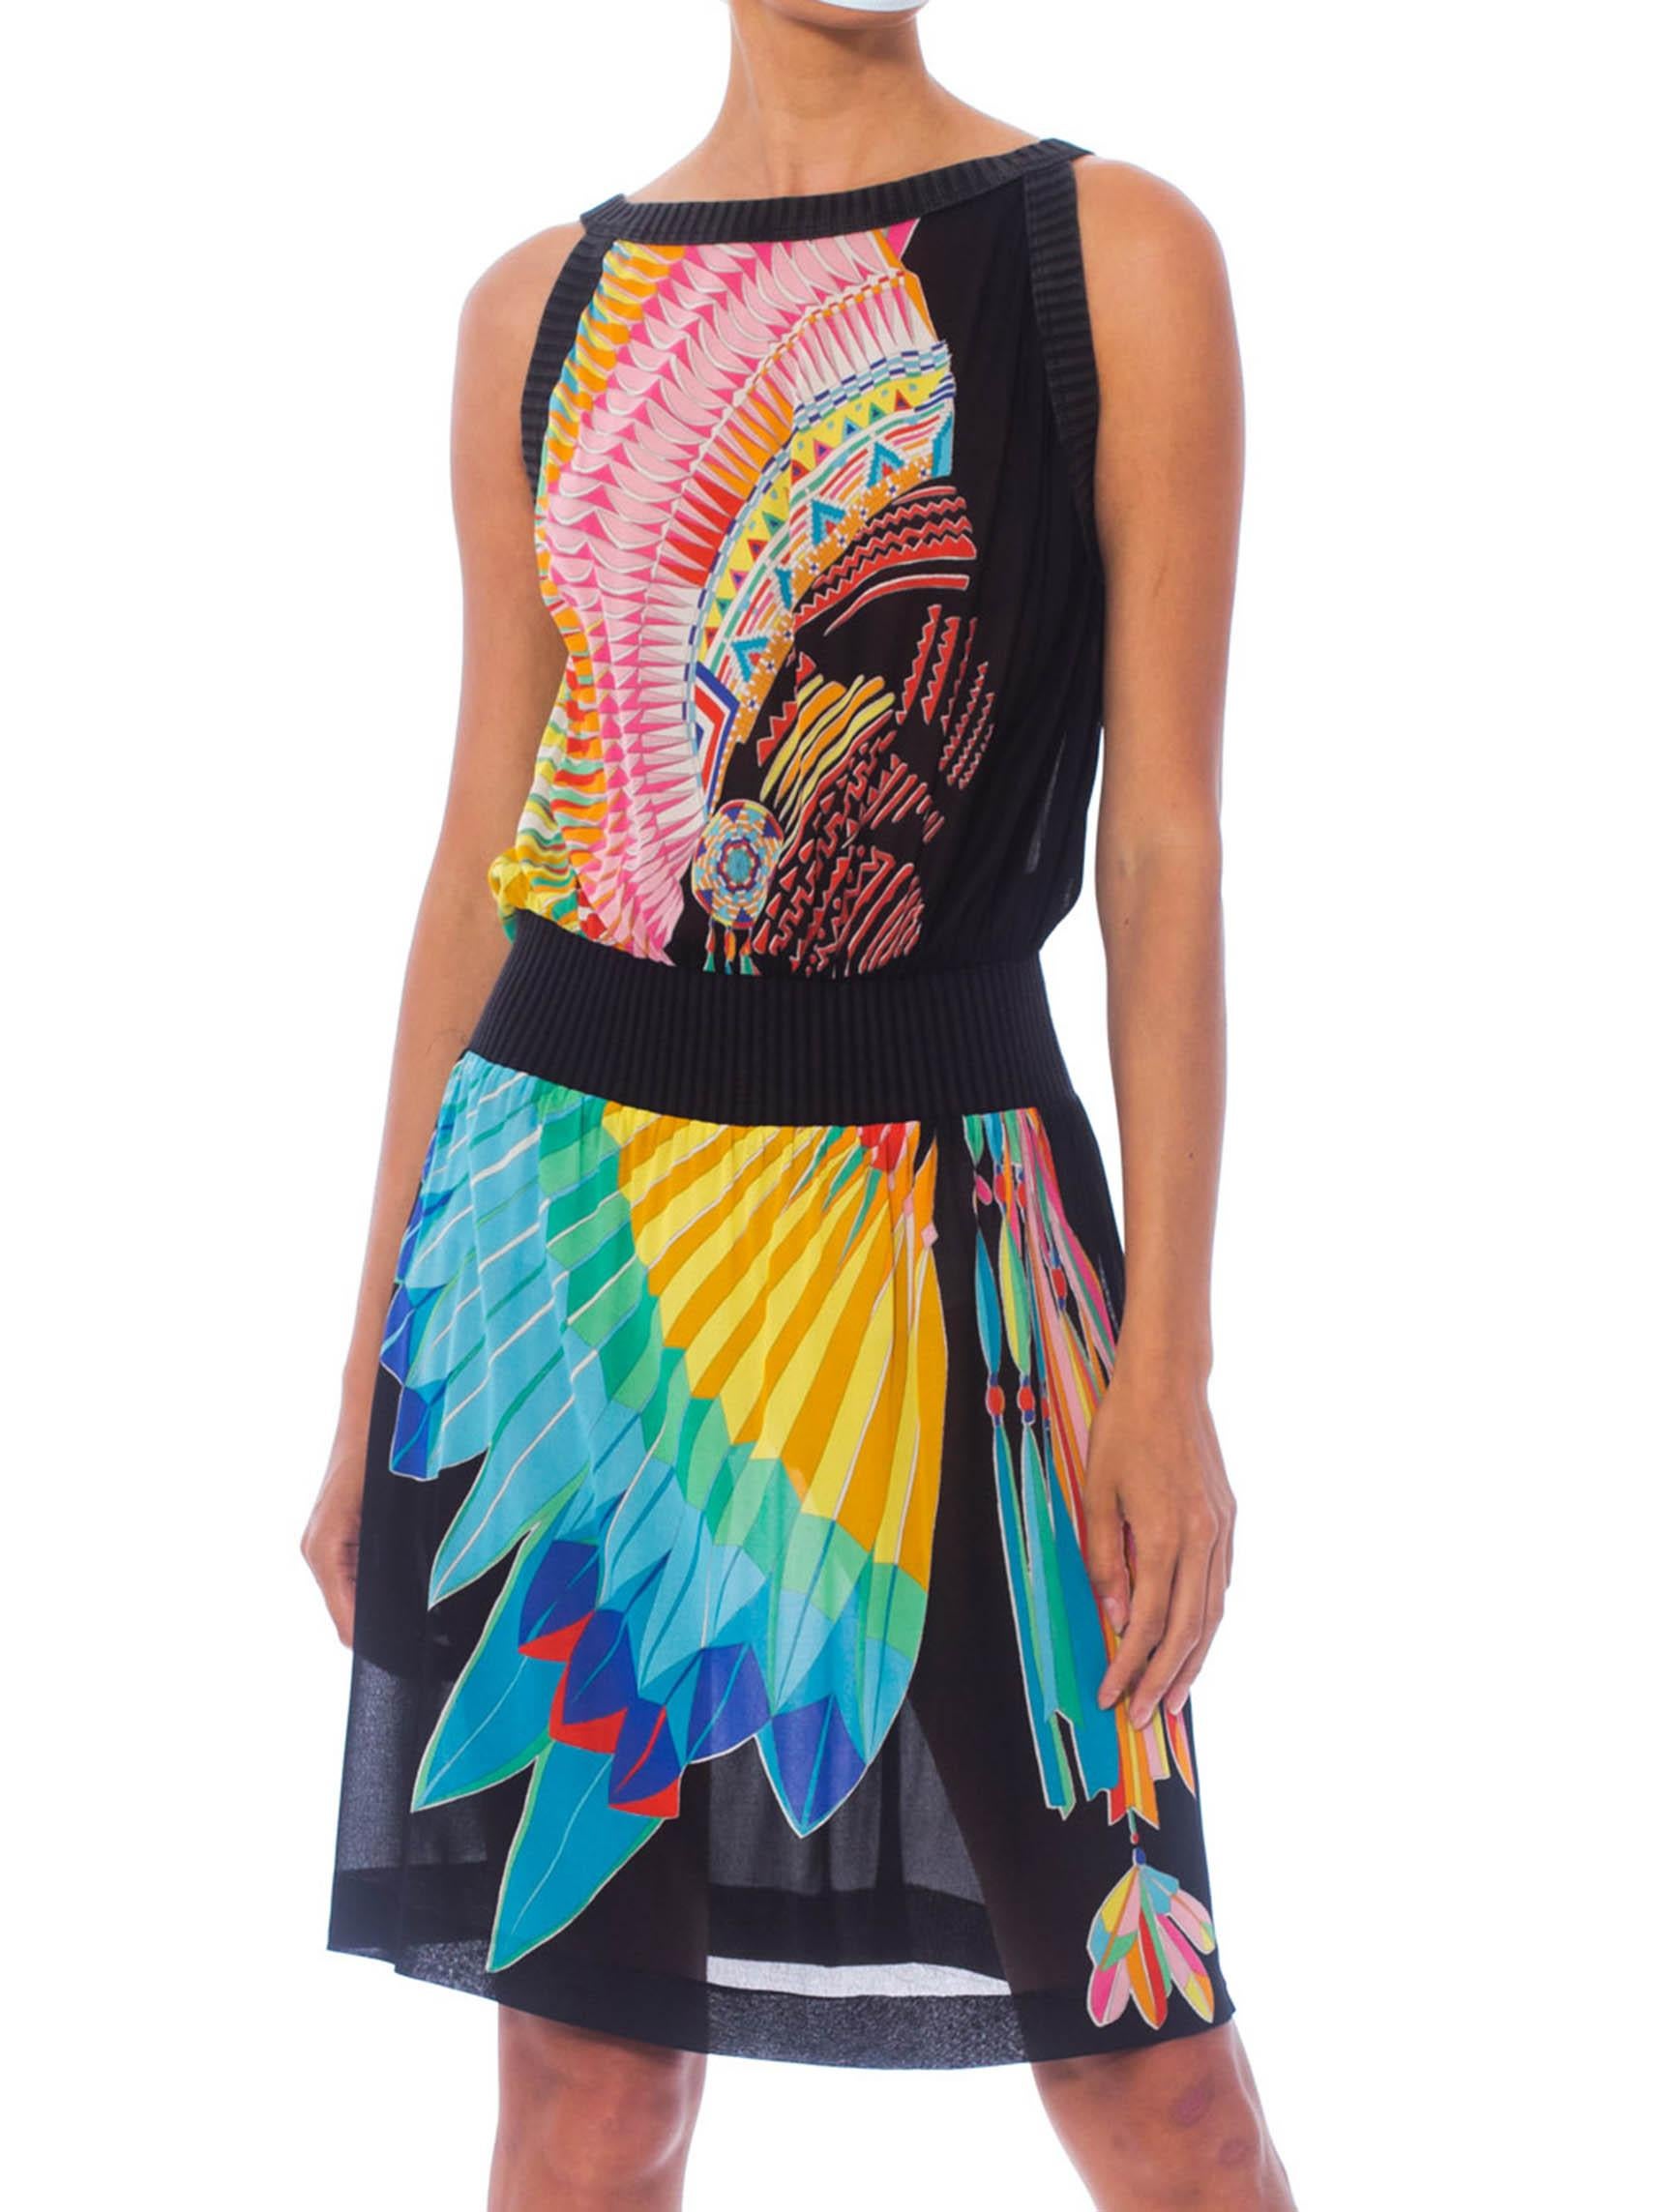 native american print dress